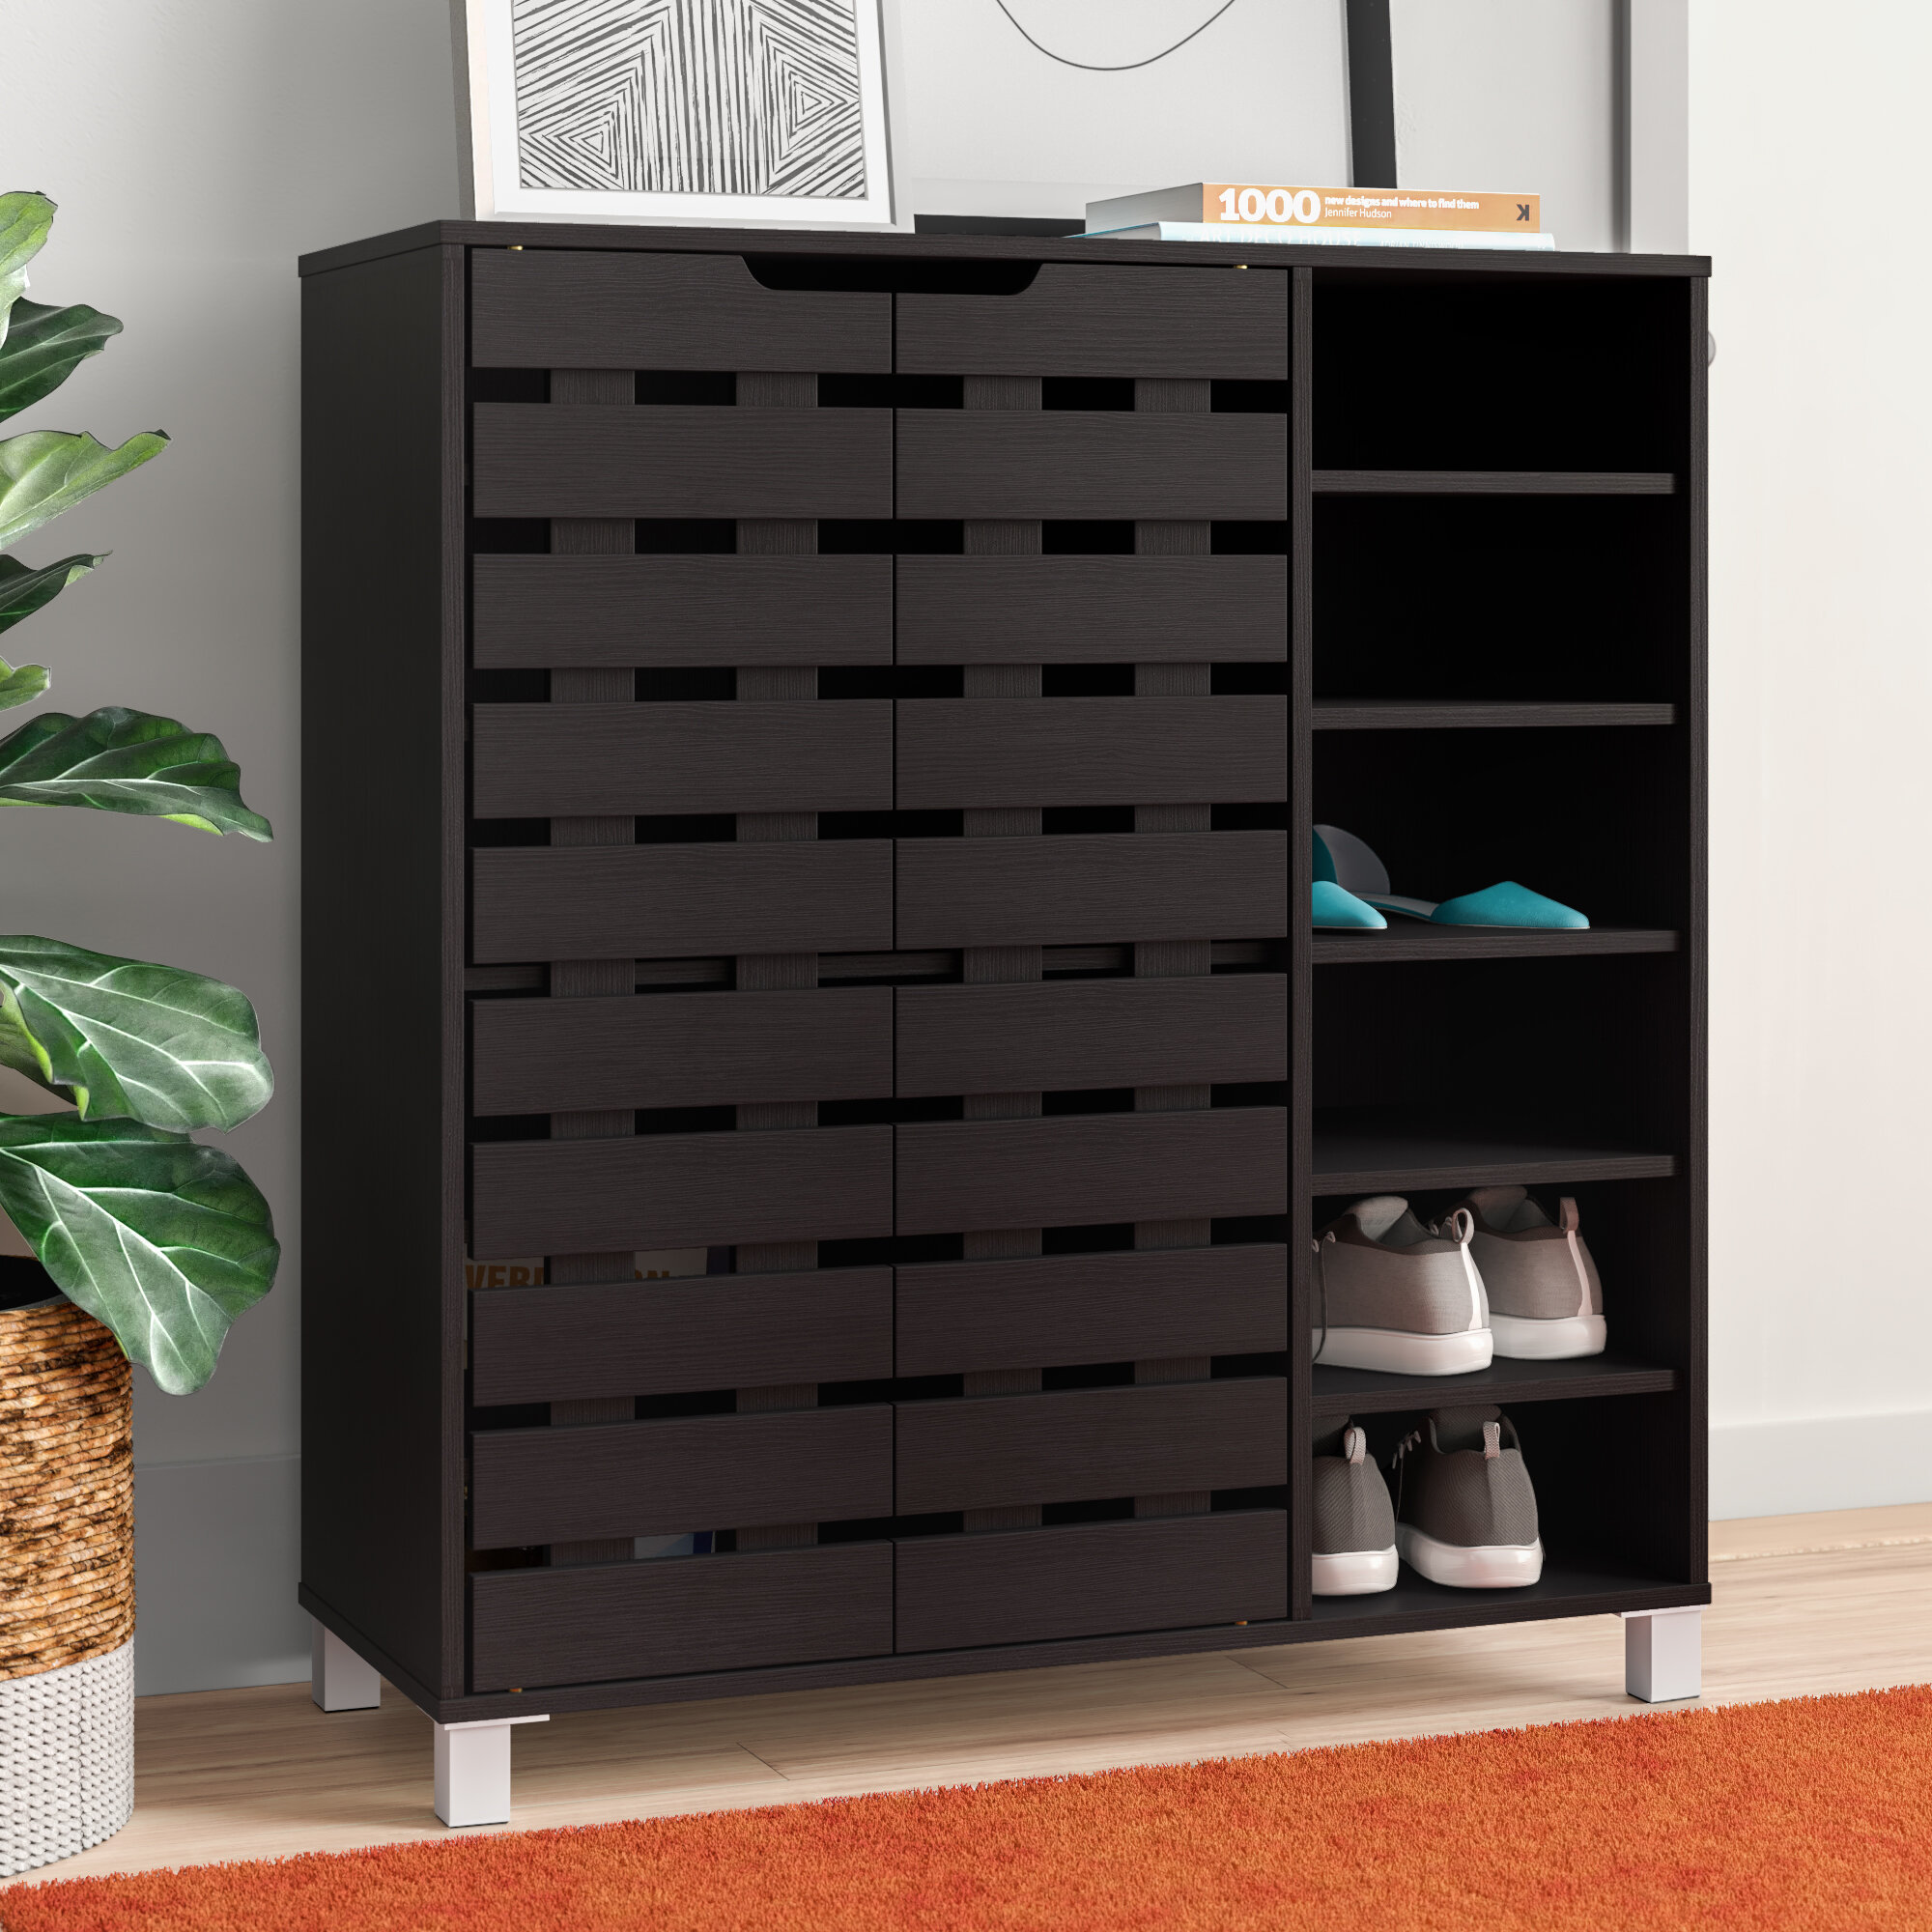 Zipcode Design 24 Pair Shoe Storage Cabinet Reviews Wayfair Ca